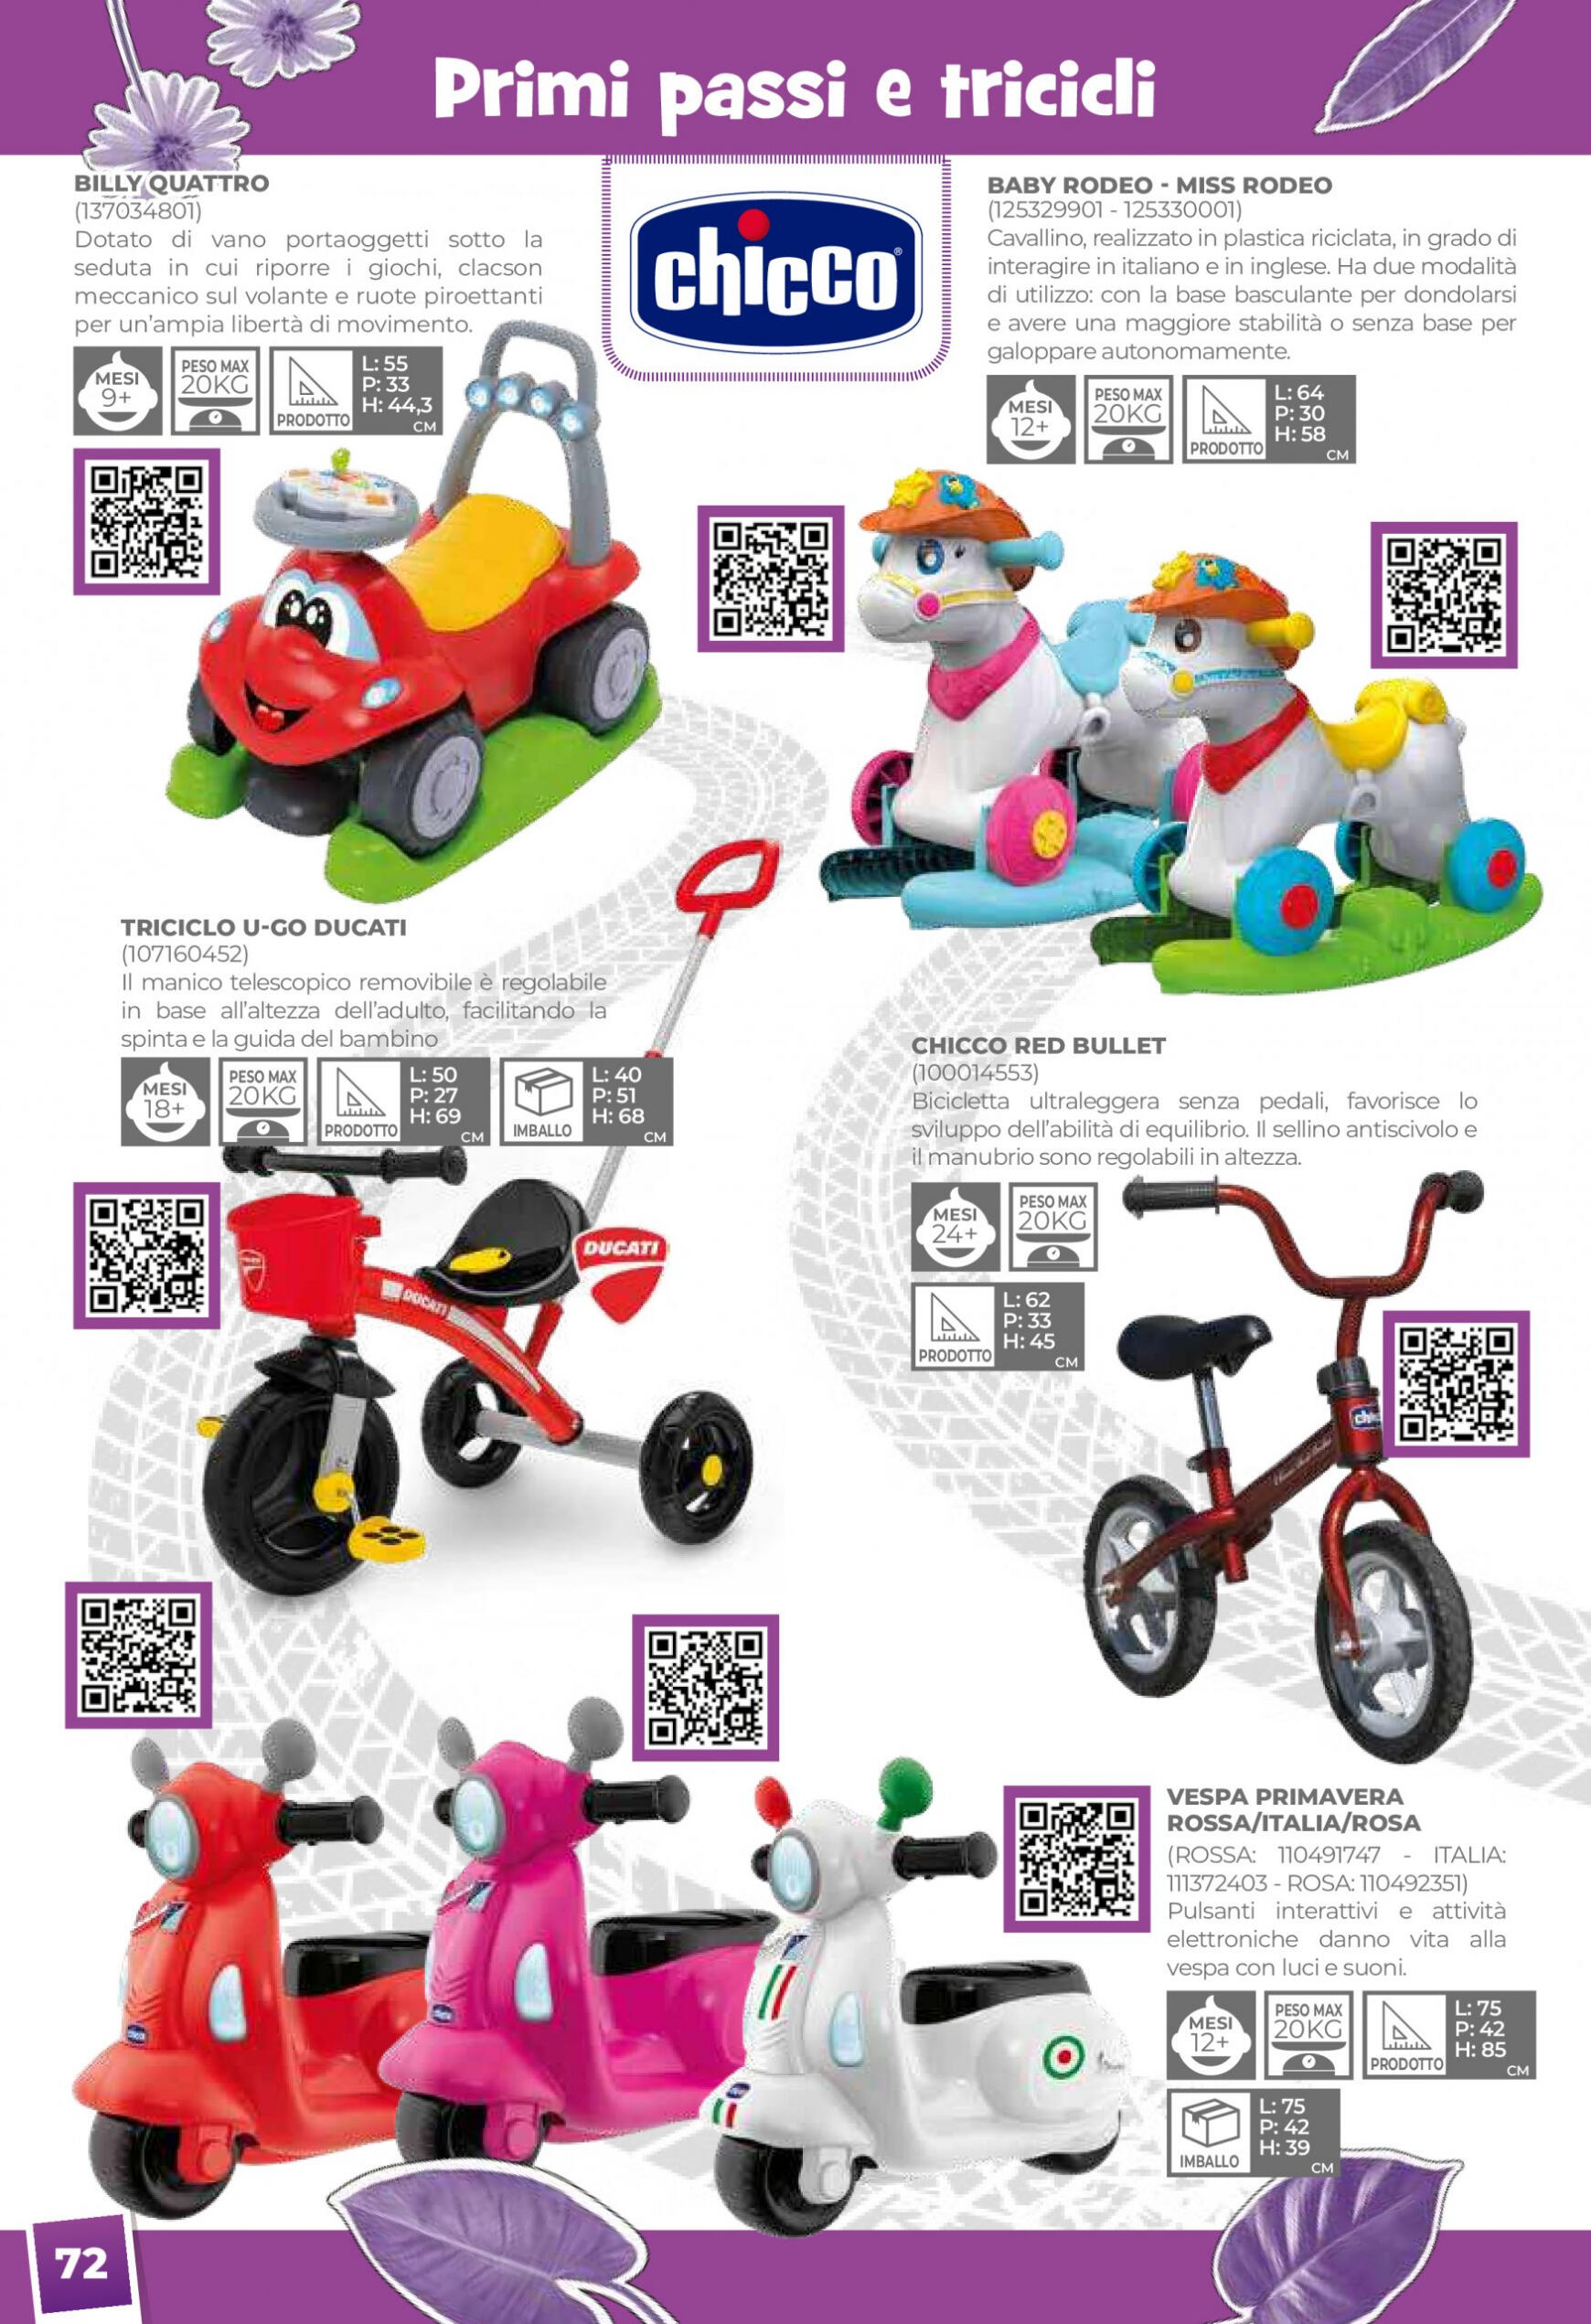 toys-center - Nuovo volantino Toys Center 01.05. - 31.12. - page: 74